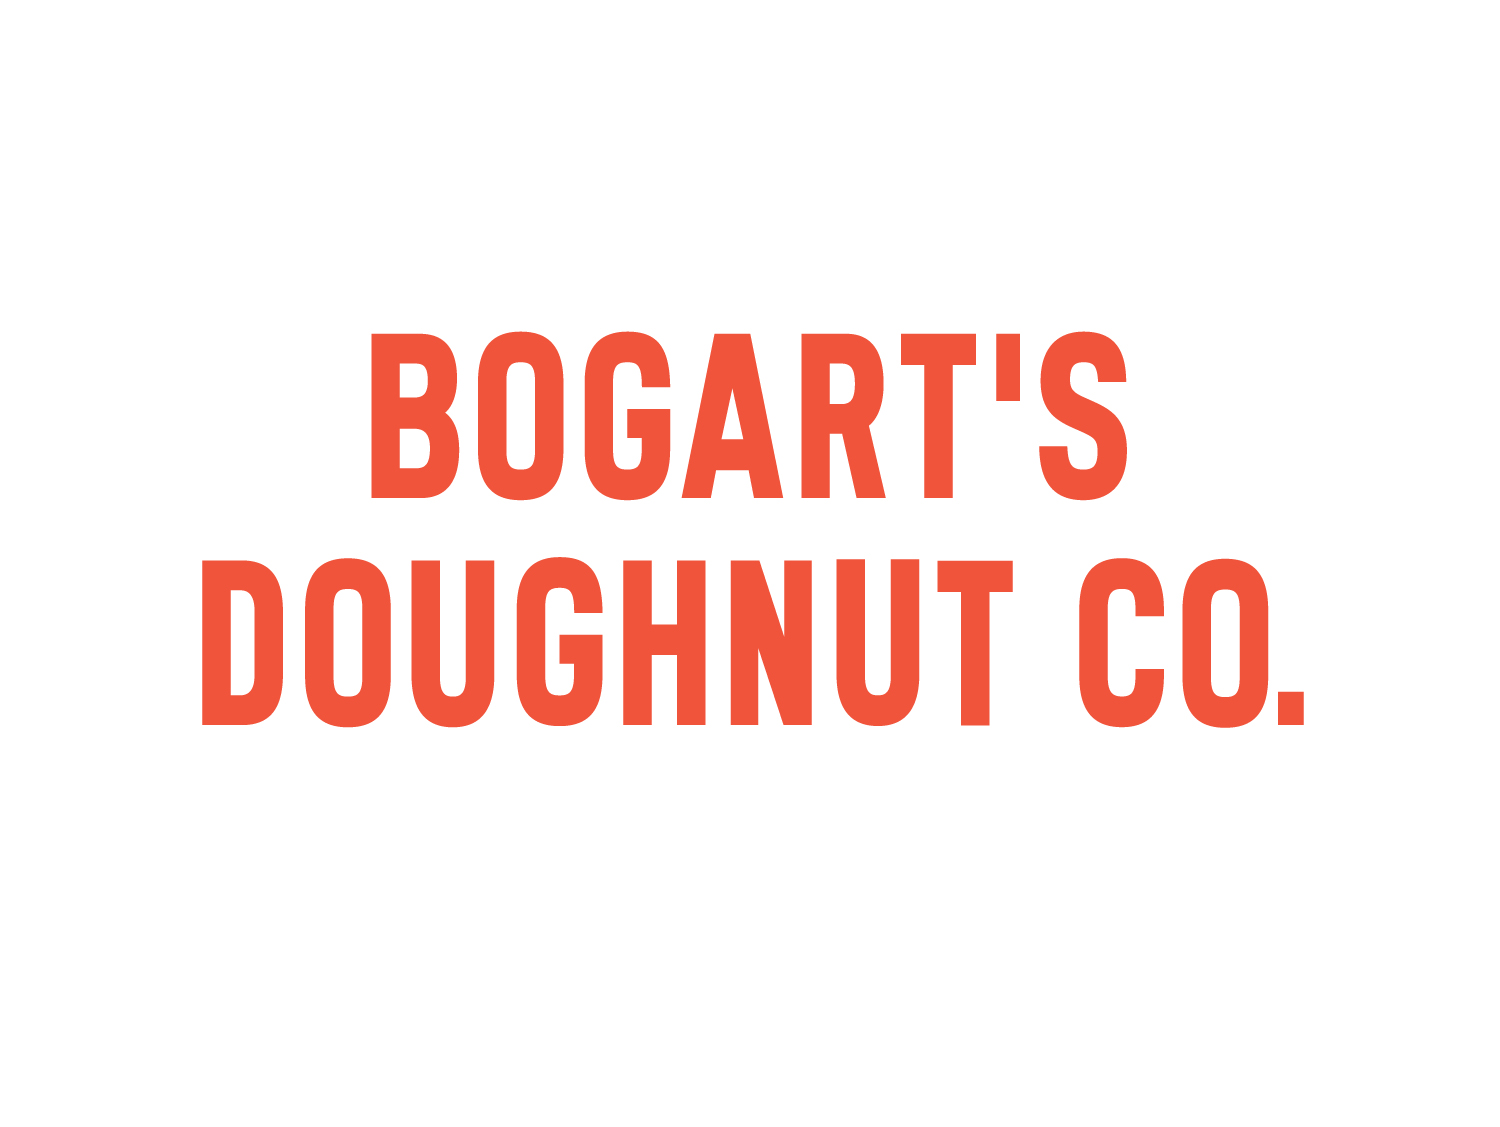 Bogarts-Doughnut-Co-logo-02.jpg